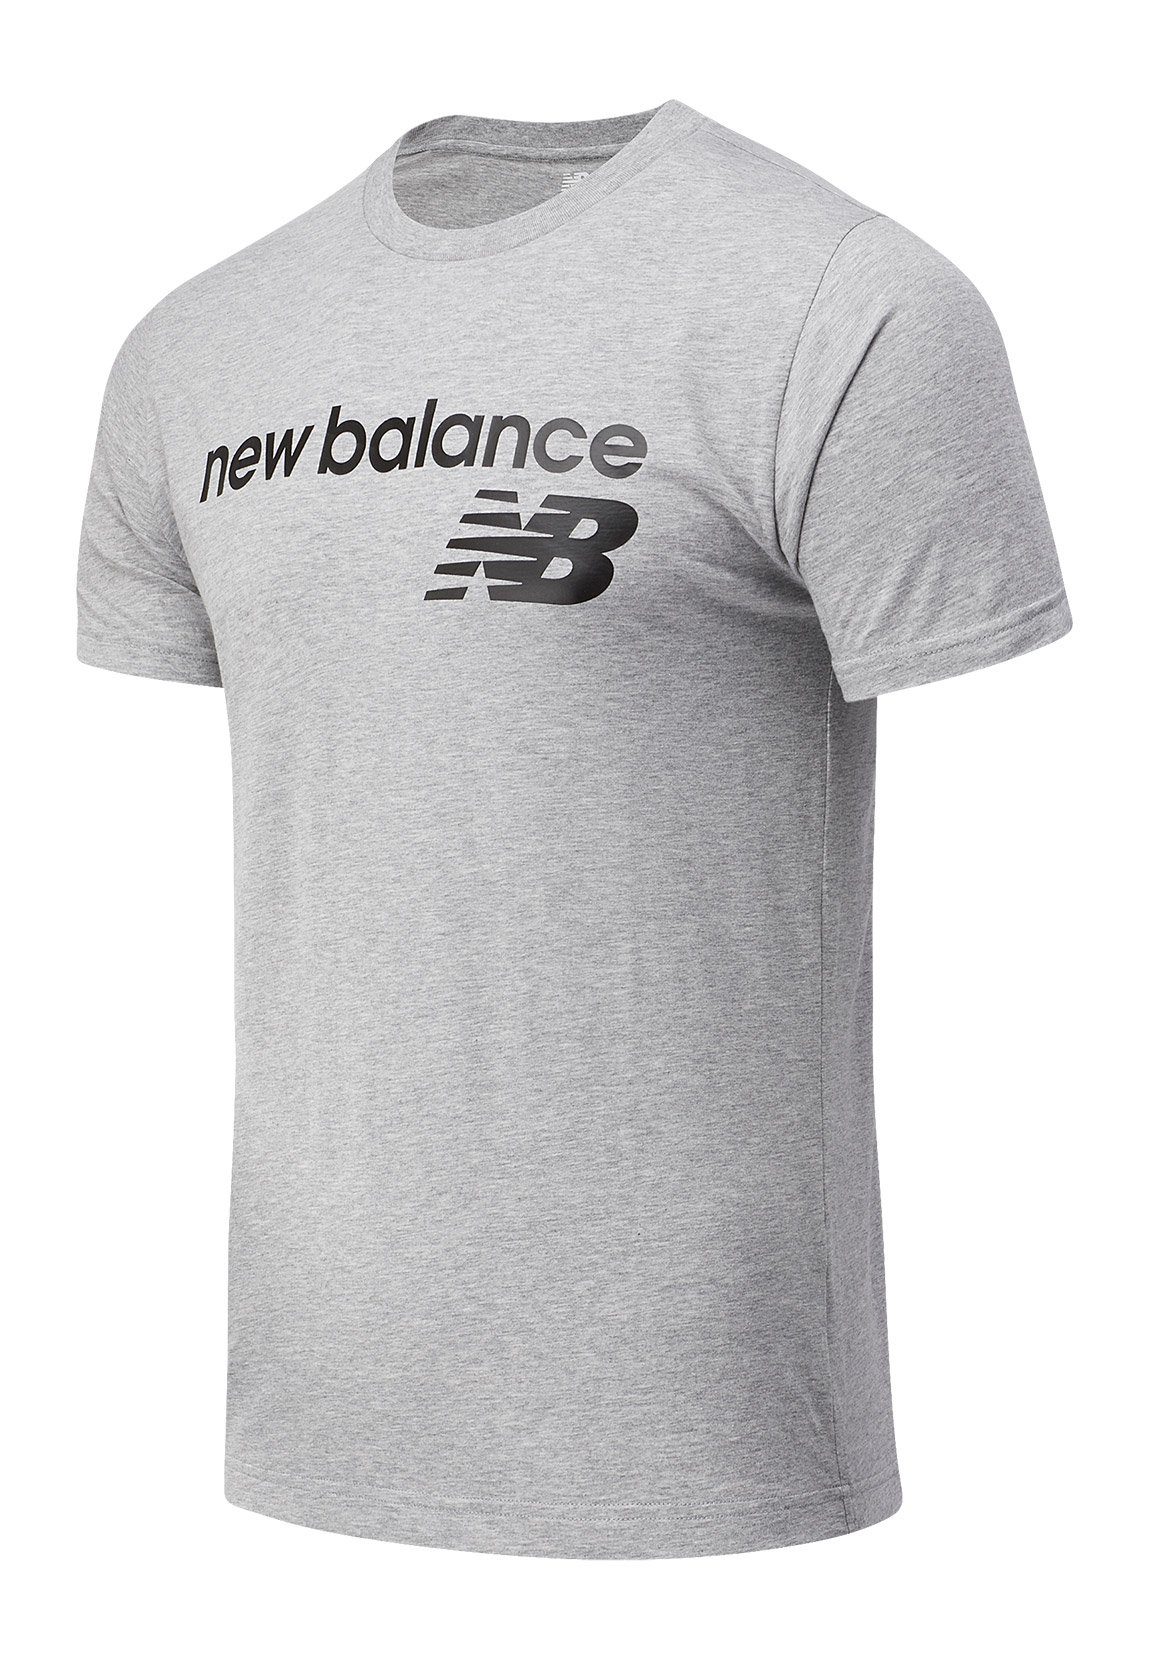 AG CLASSIC LOGO Gau Balance CORE New New Athletic T-Shirt Grey Balance ATHLGREY T-Shirt TEE MT03905